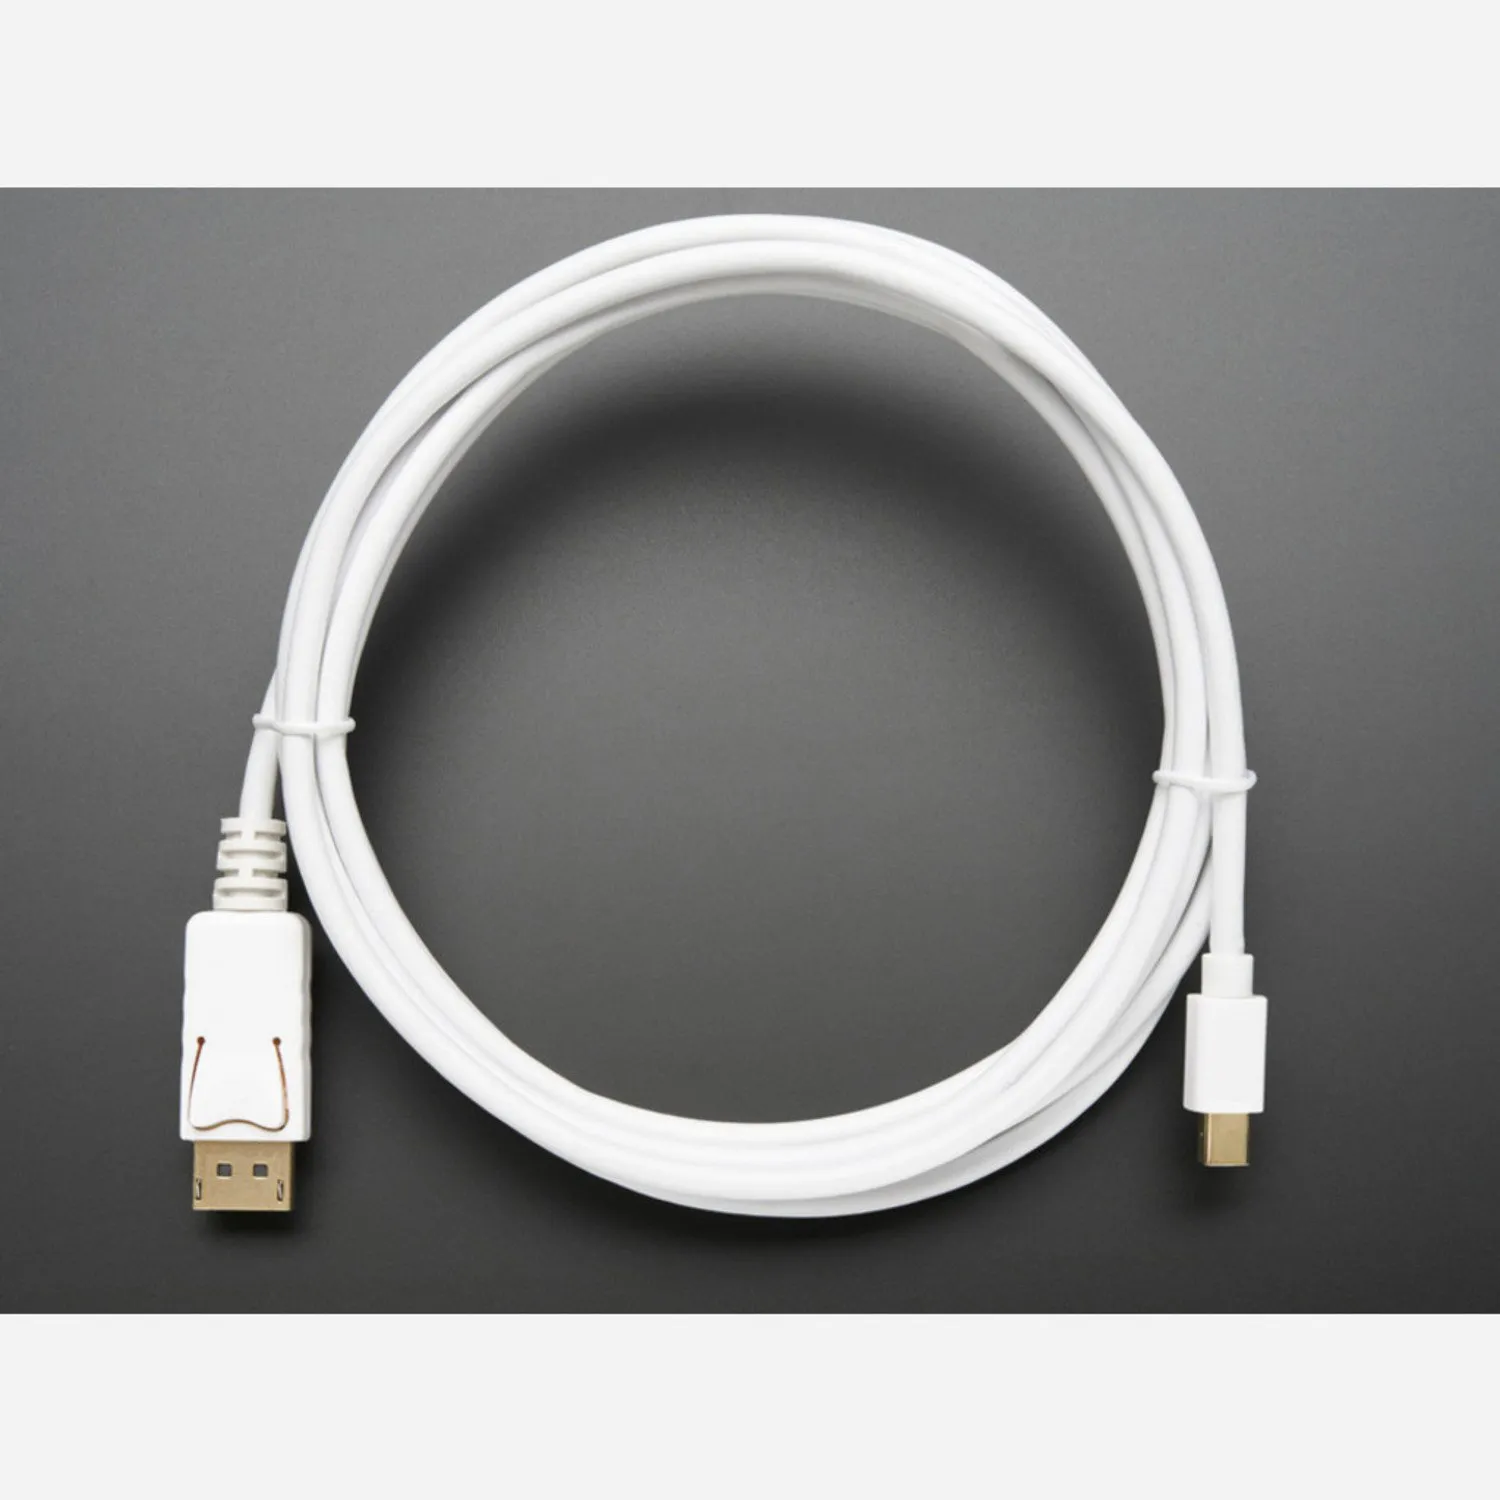 Photo of Mini DisplayPort to DisplayPort Cable - 10 ft/3 meters - White